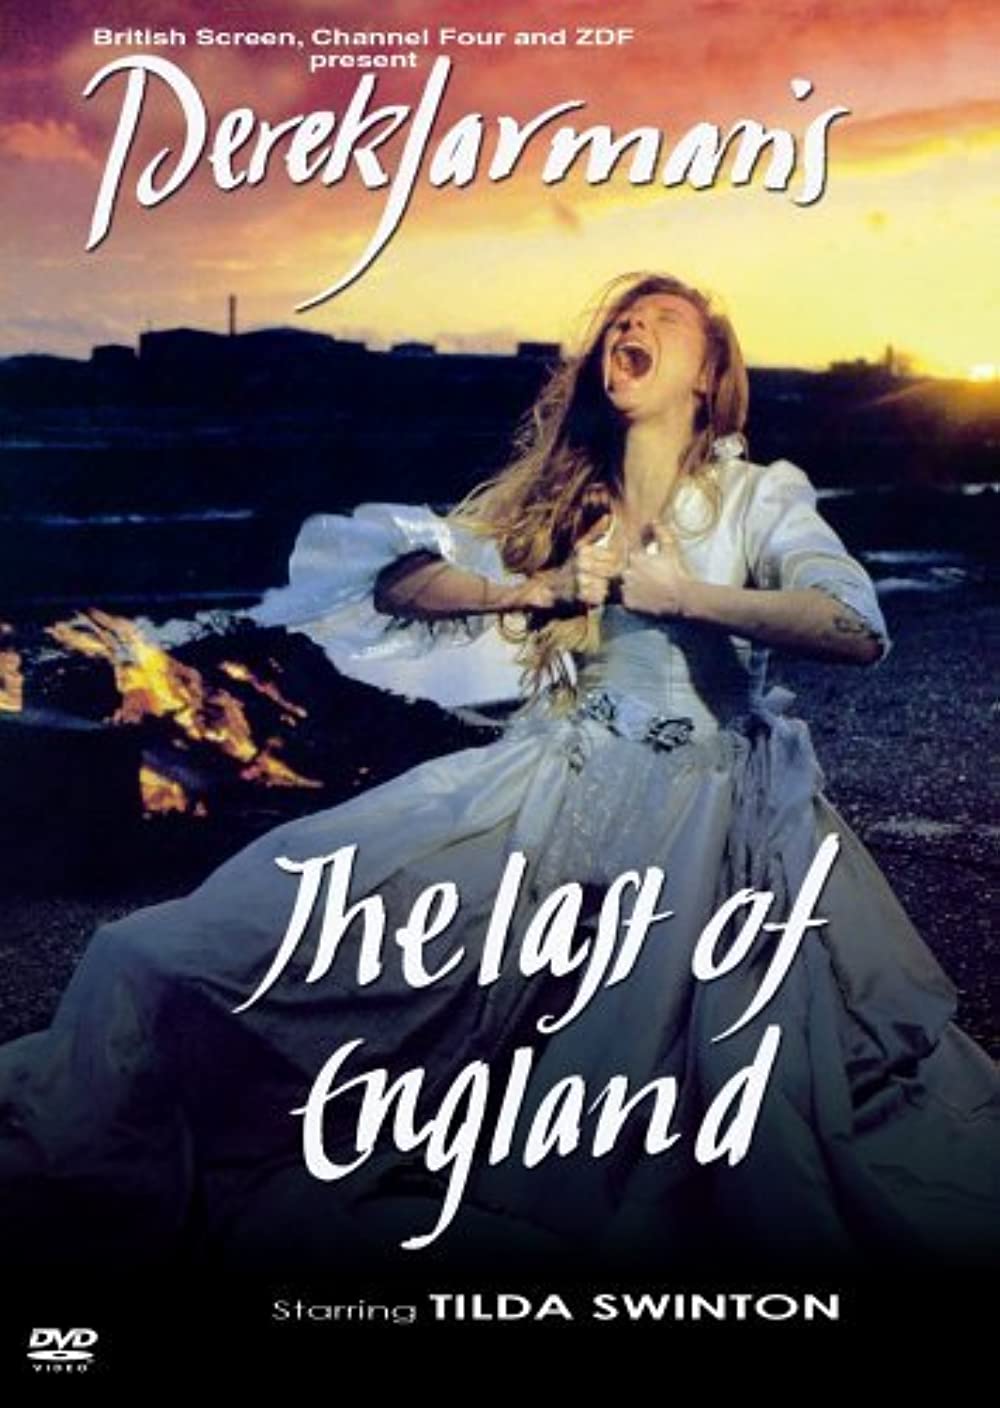 Filmbeschreibung zu The Last of England (OV)